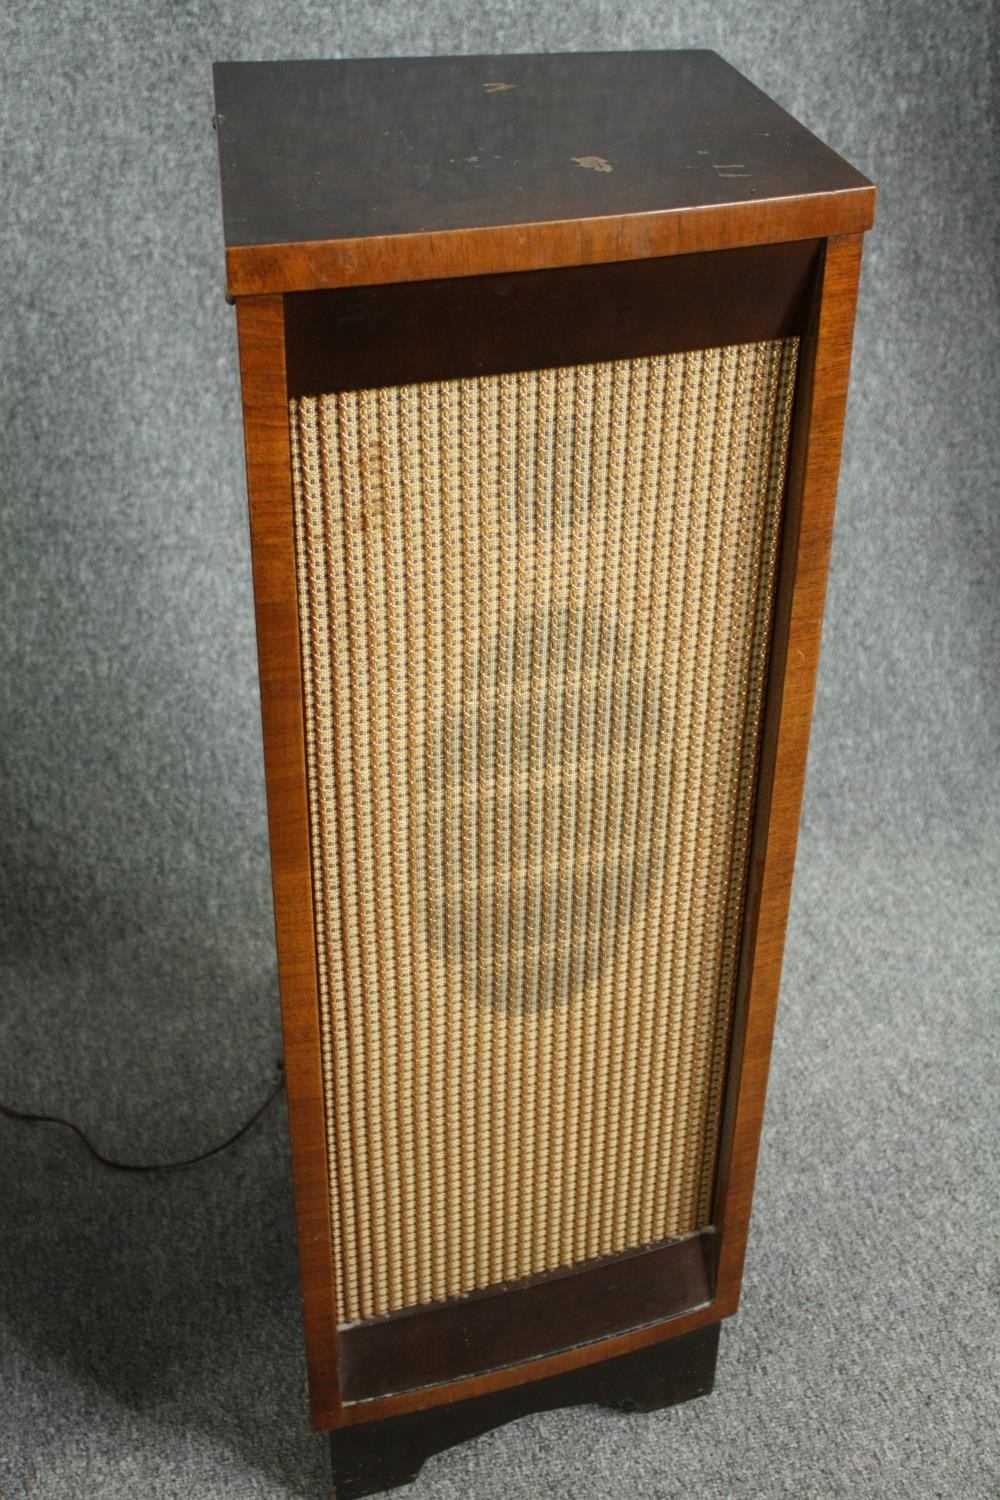 HMV radiogram, Garrard RC.121, mid century burr walnut cased with matching speakers. H.86 W.61 D. - Image 13 of 22